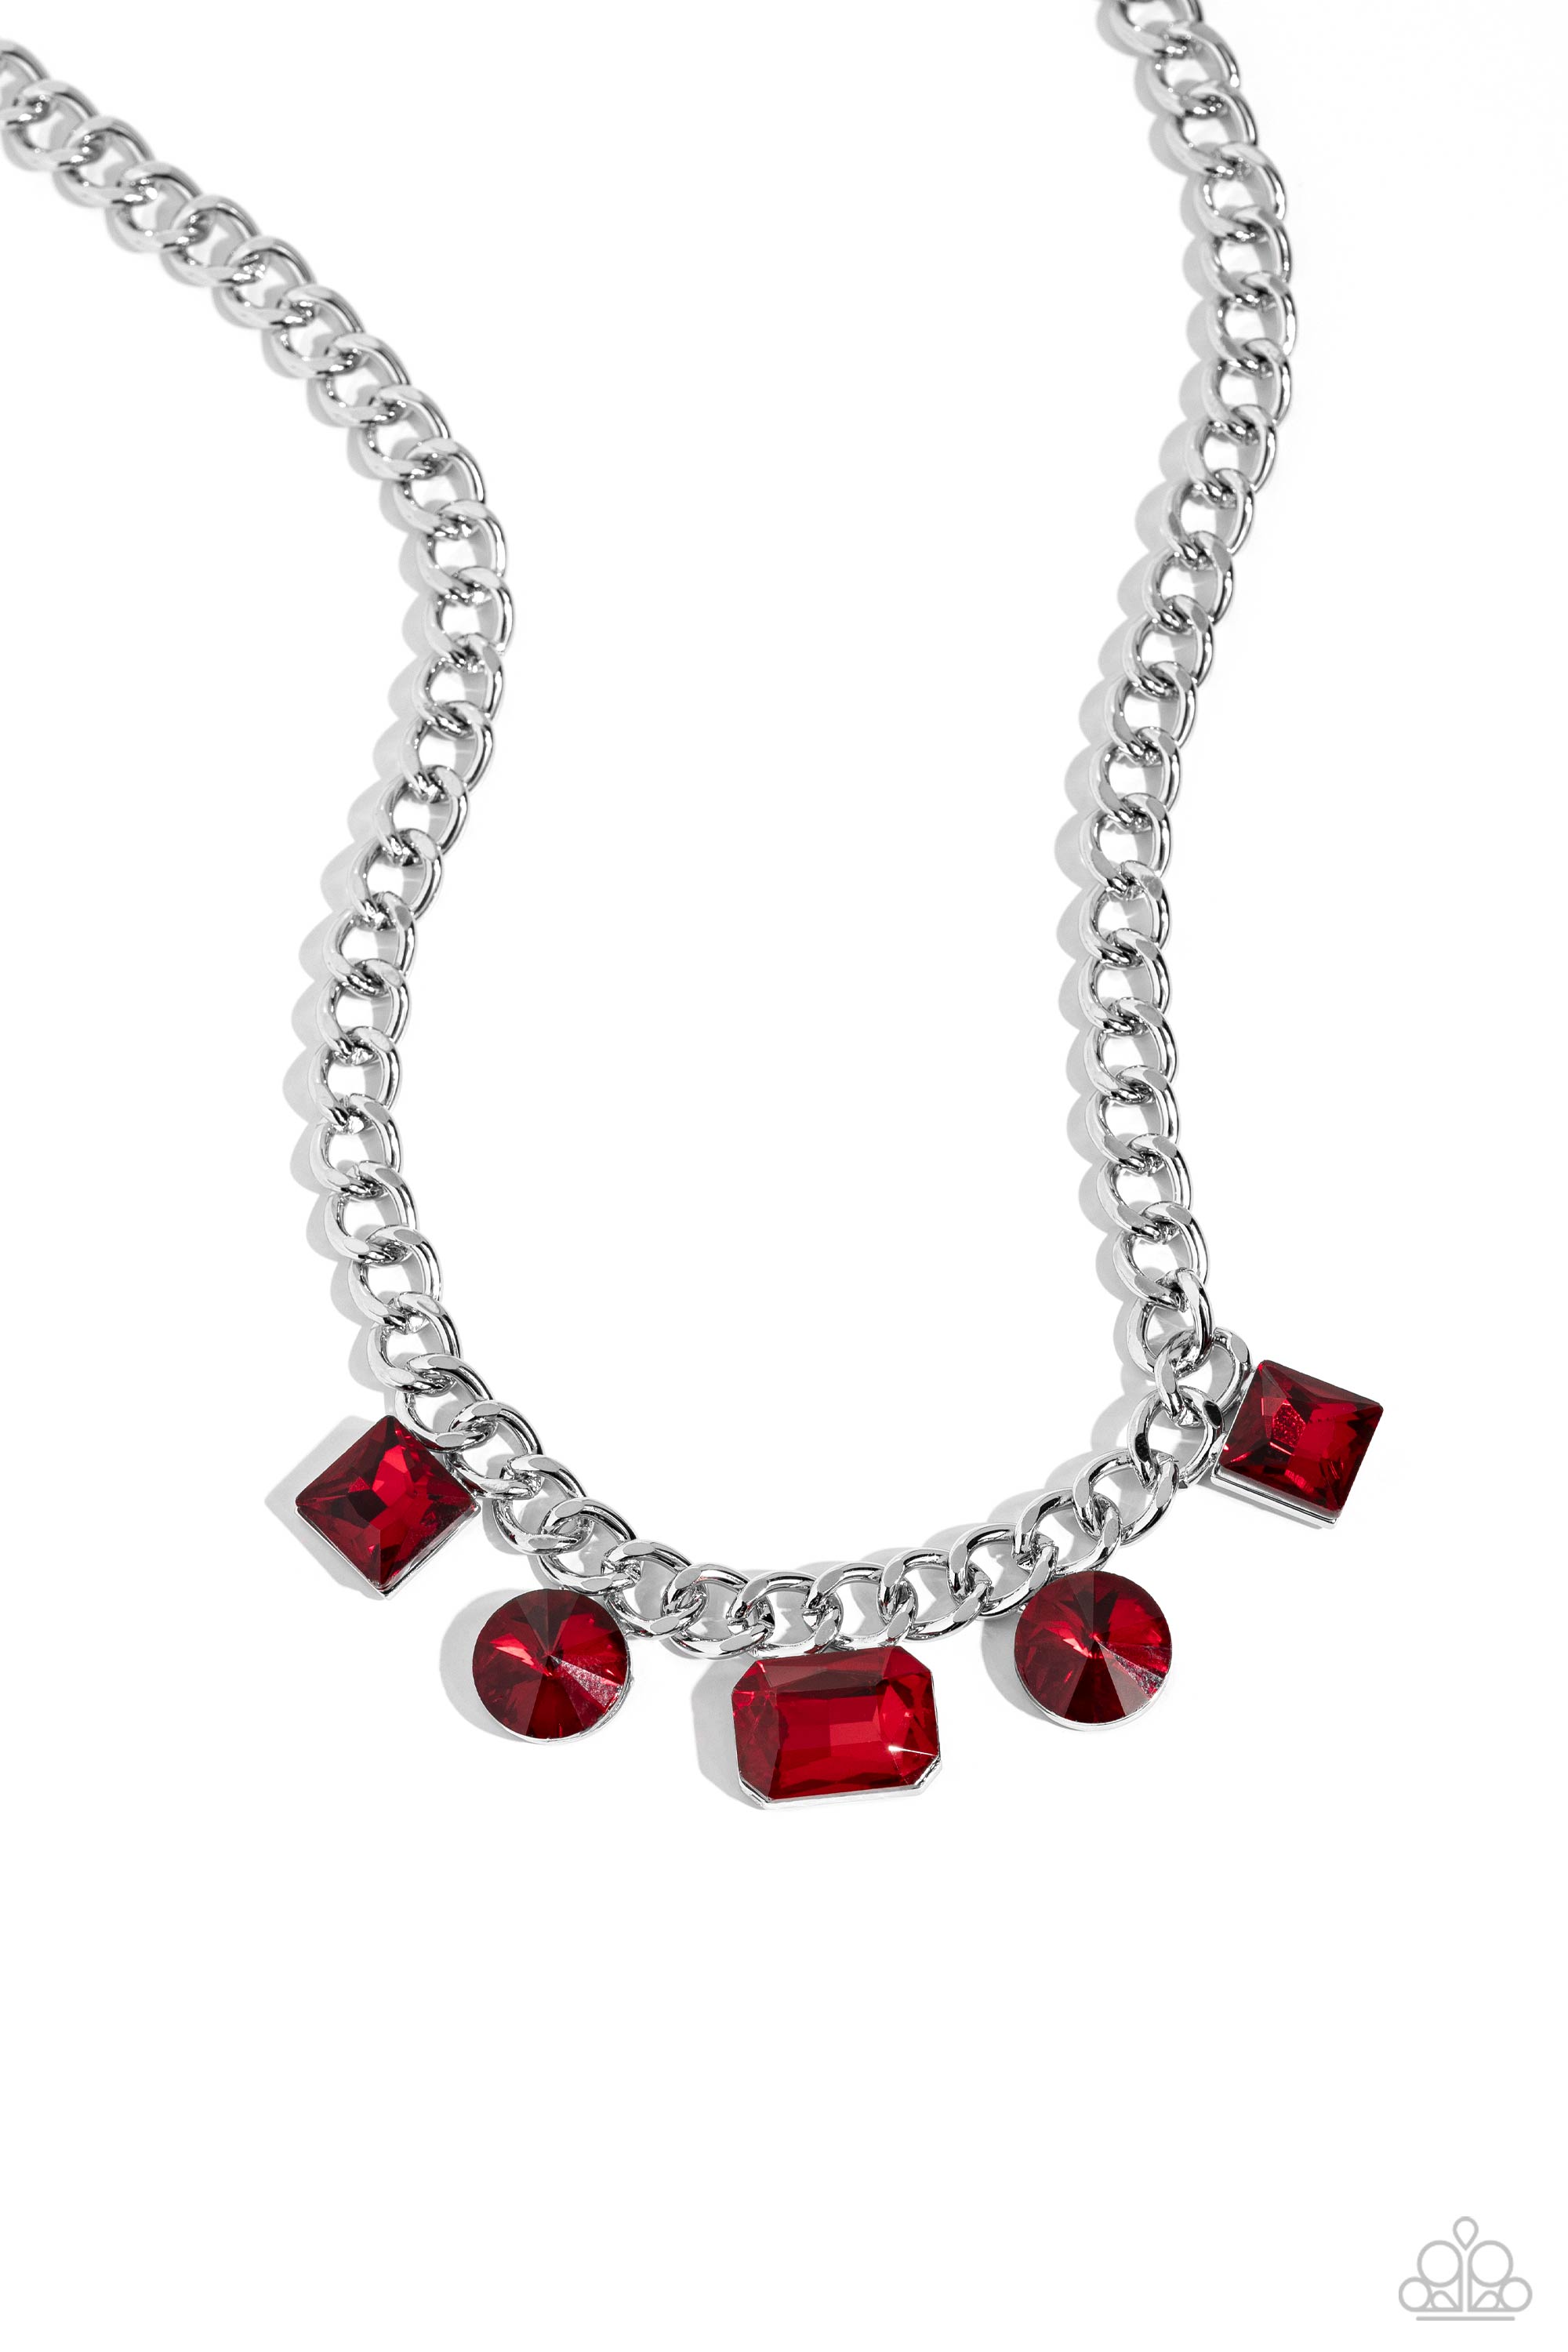 Alternating Audacity Red Rhinestone Necklace - Paparazzi Accessories- lightbox - CarasShop.com - $5 Jewelry by Cara Jewels